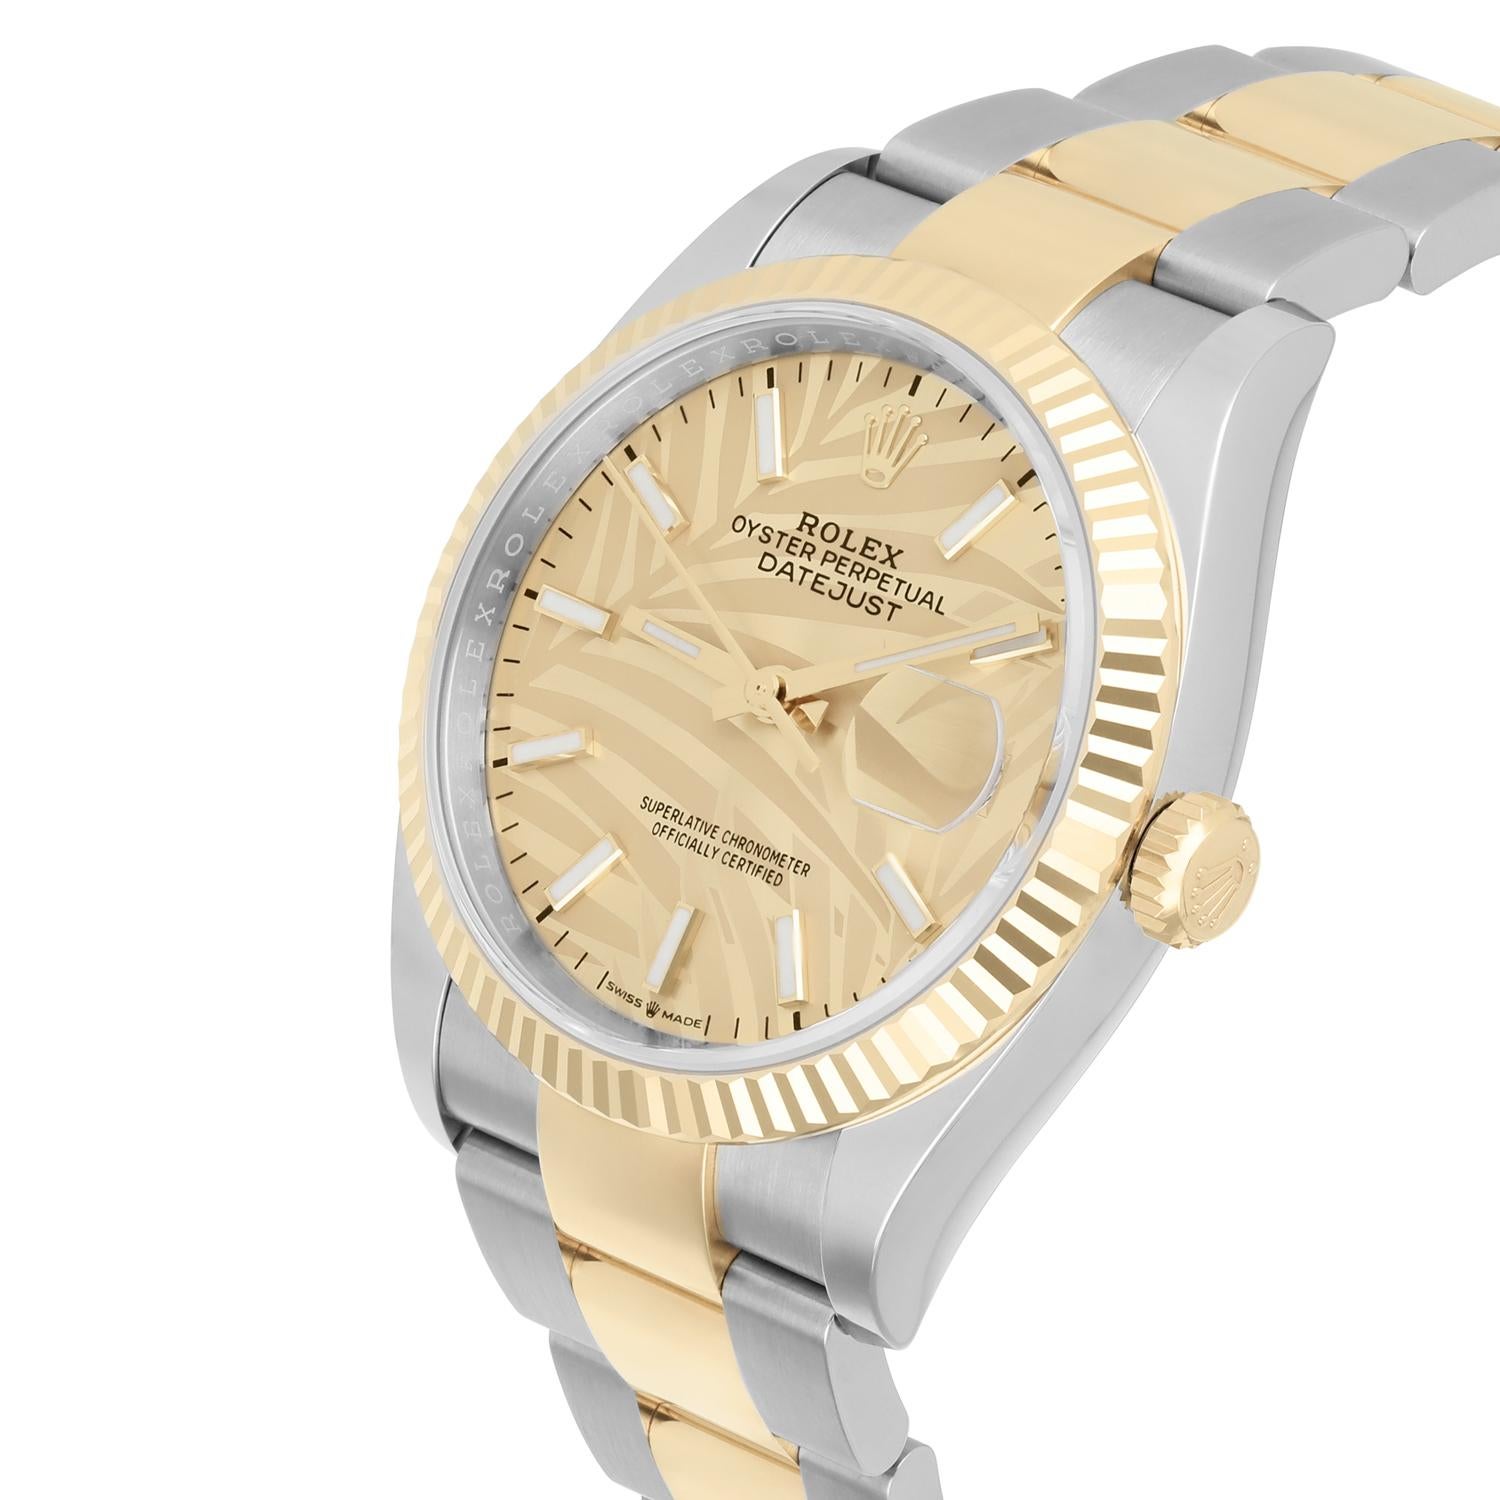 Modern Rolex Datejust 36mm Champagne Palm Dial Oyster 126233, Unworn Watch Complete